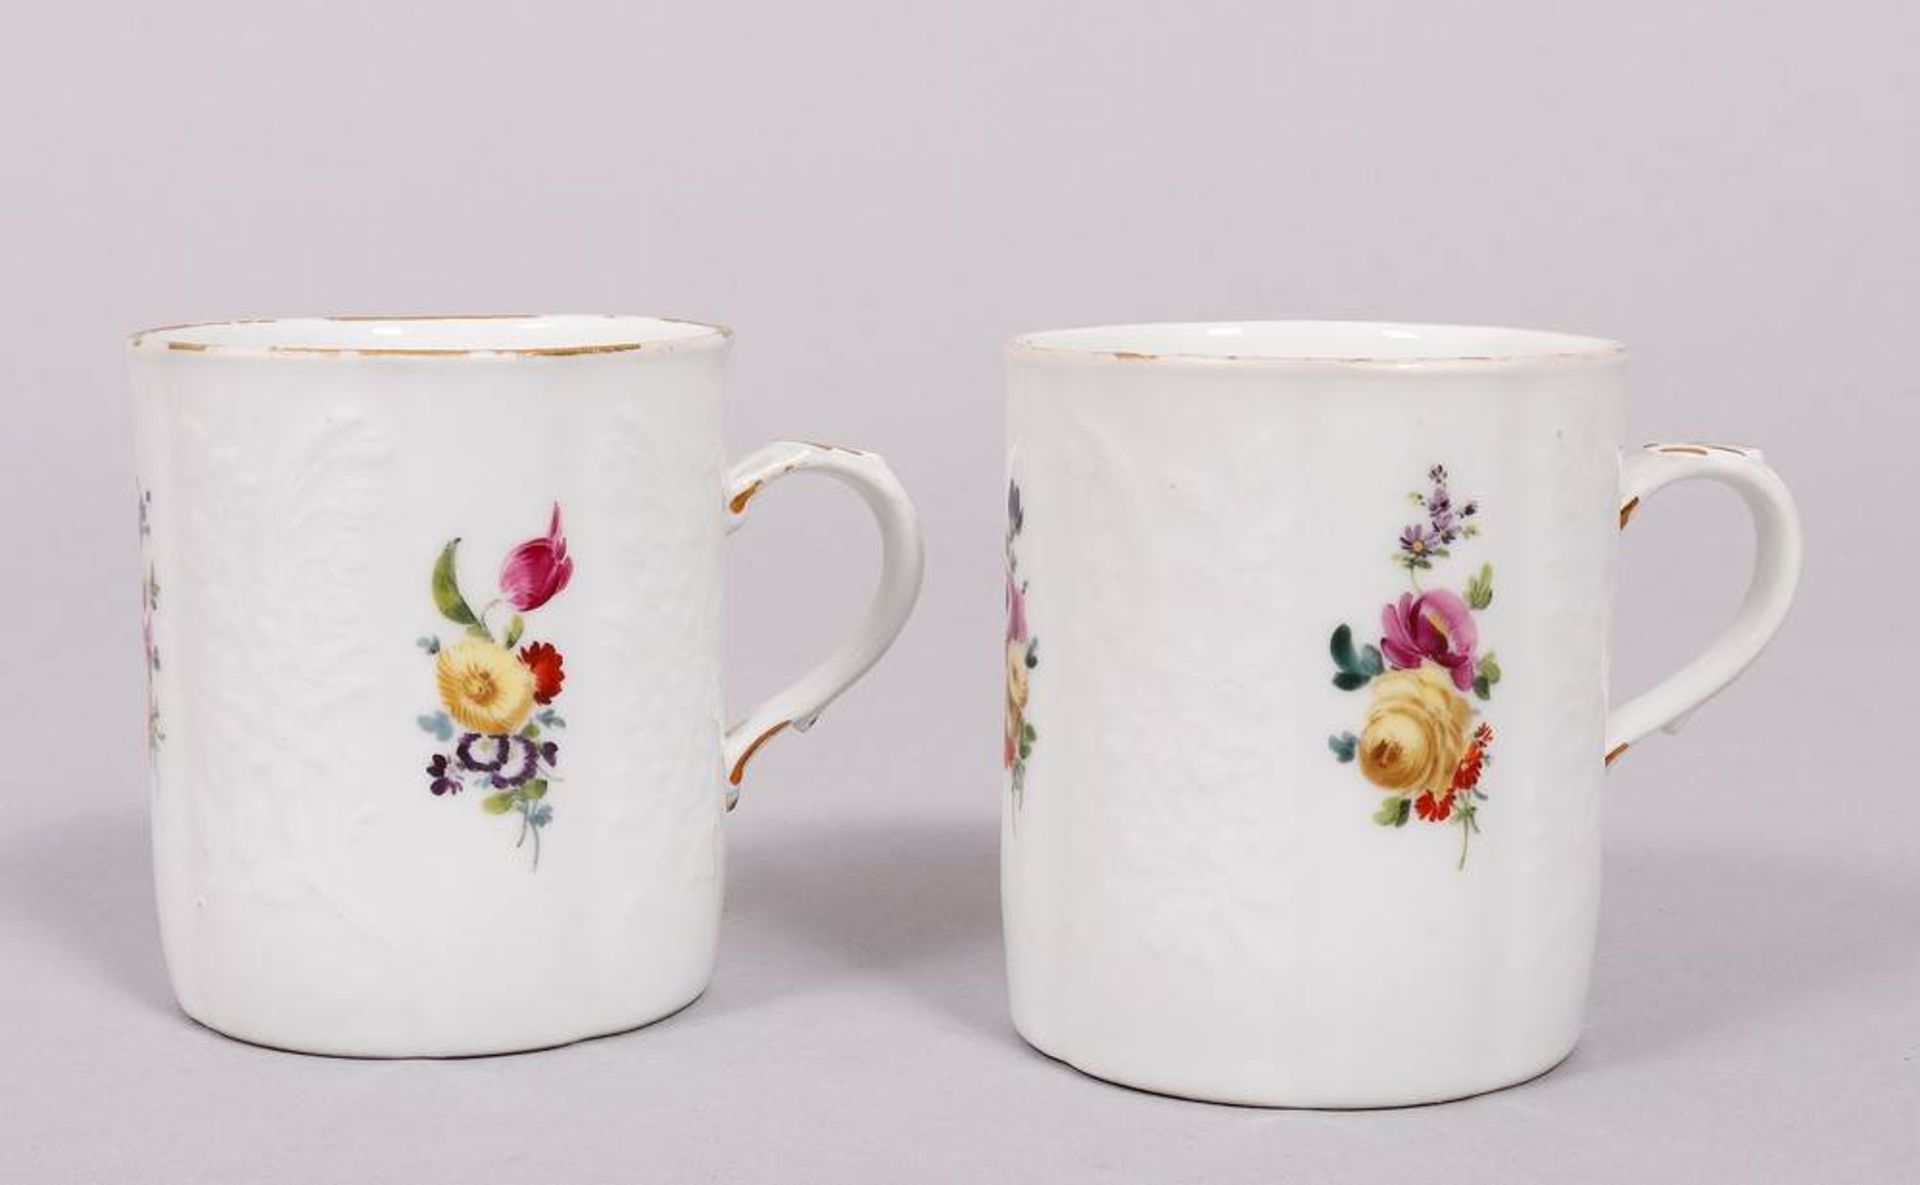 2 cups, Meissen, form by Johann Joachim Kaendler, "Gotzkowsky-Dessin", probably manufactured middle